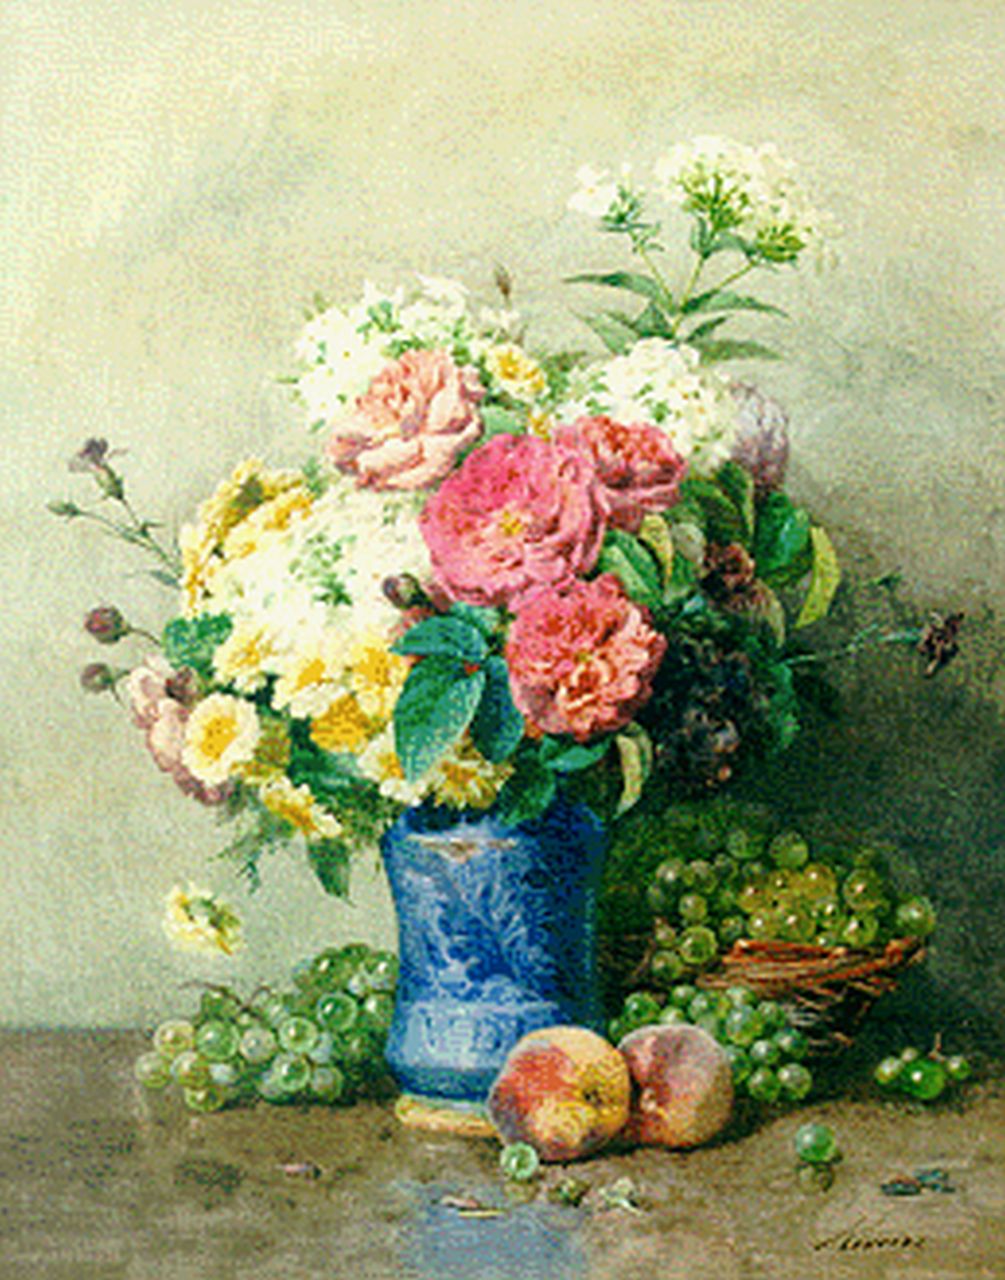 François Rivoire | Still life with roses, phloxes and fruit, Aquarell auf Papier, 58,4 x 46,4 cm, signed l.r.